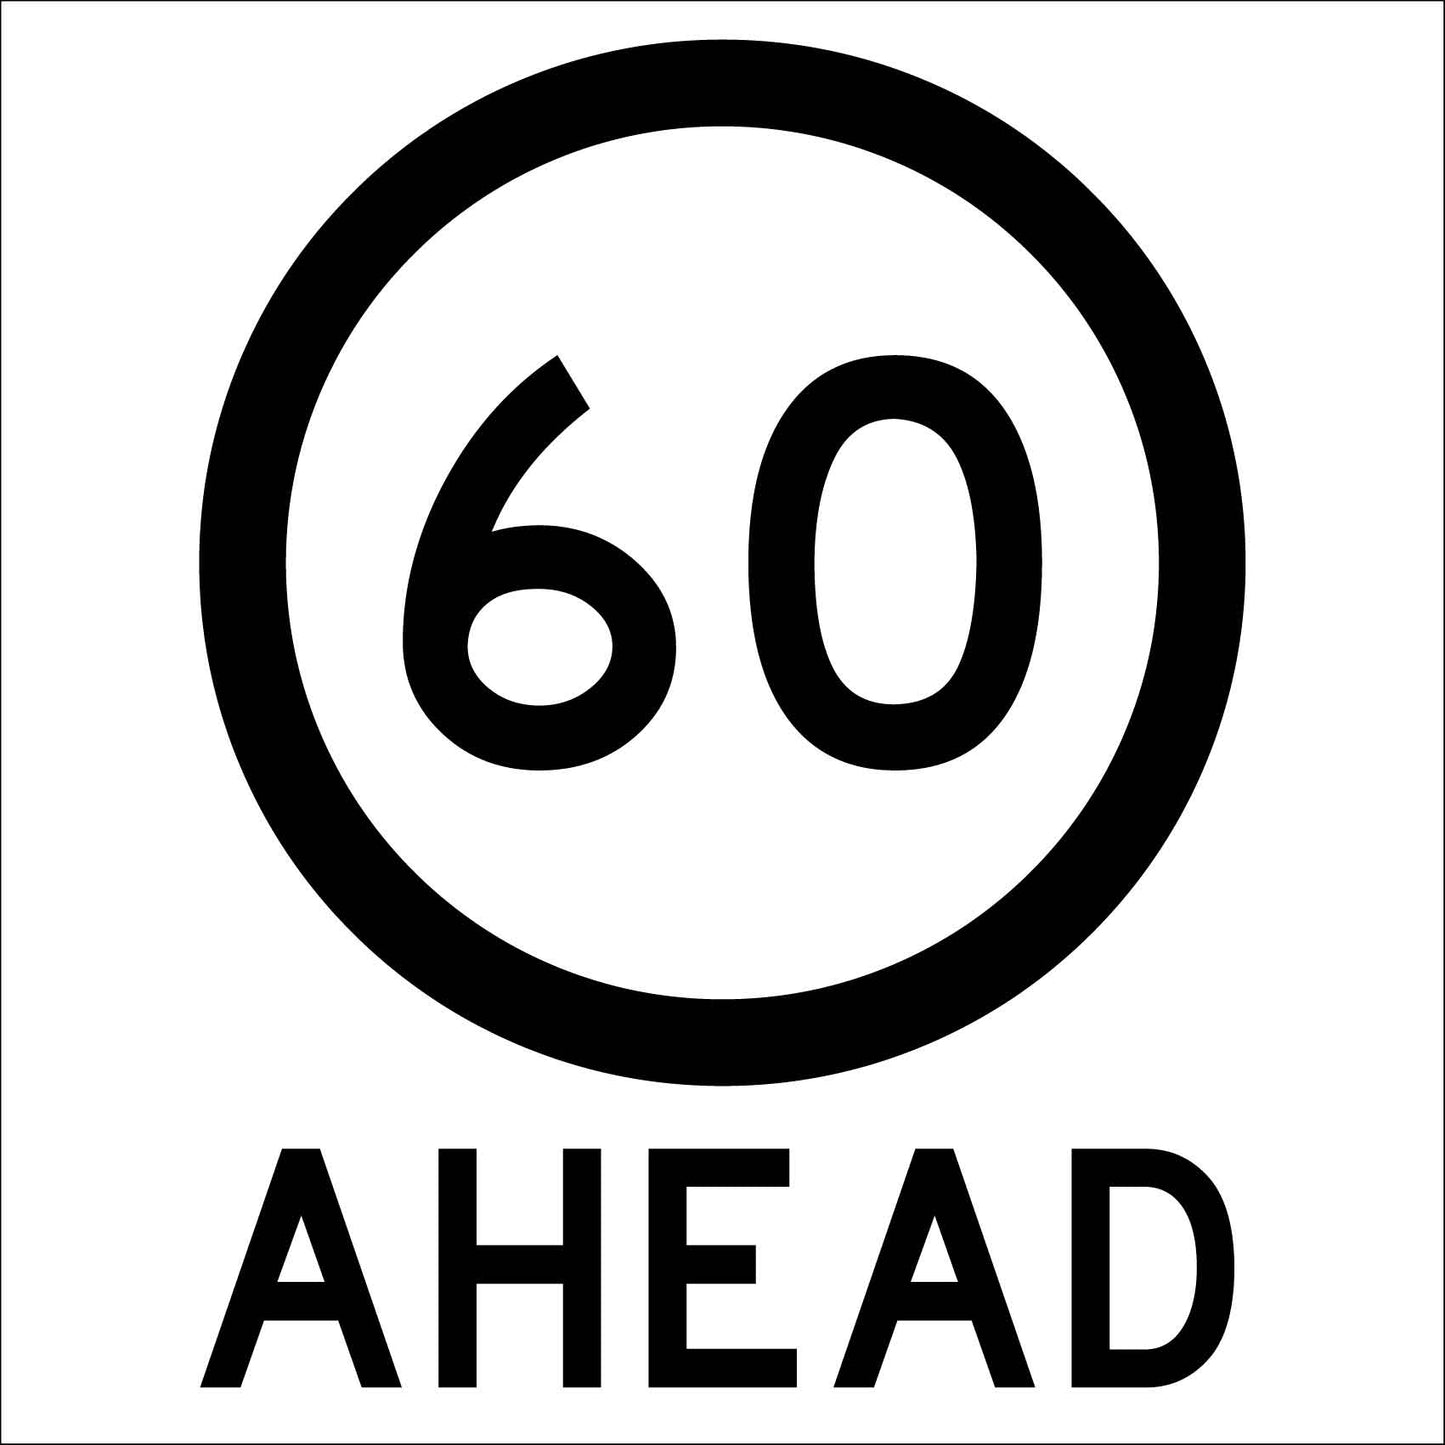 60km Ahead Multi Message Traffic Sign